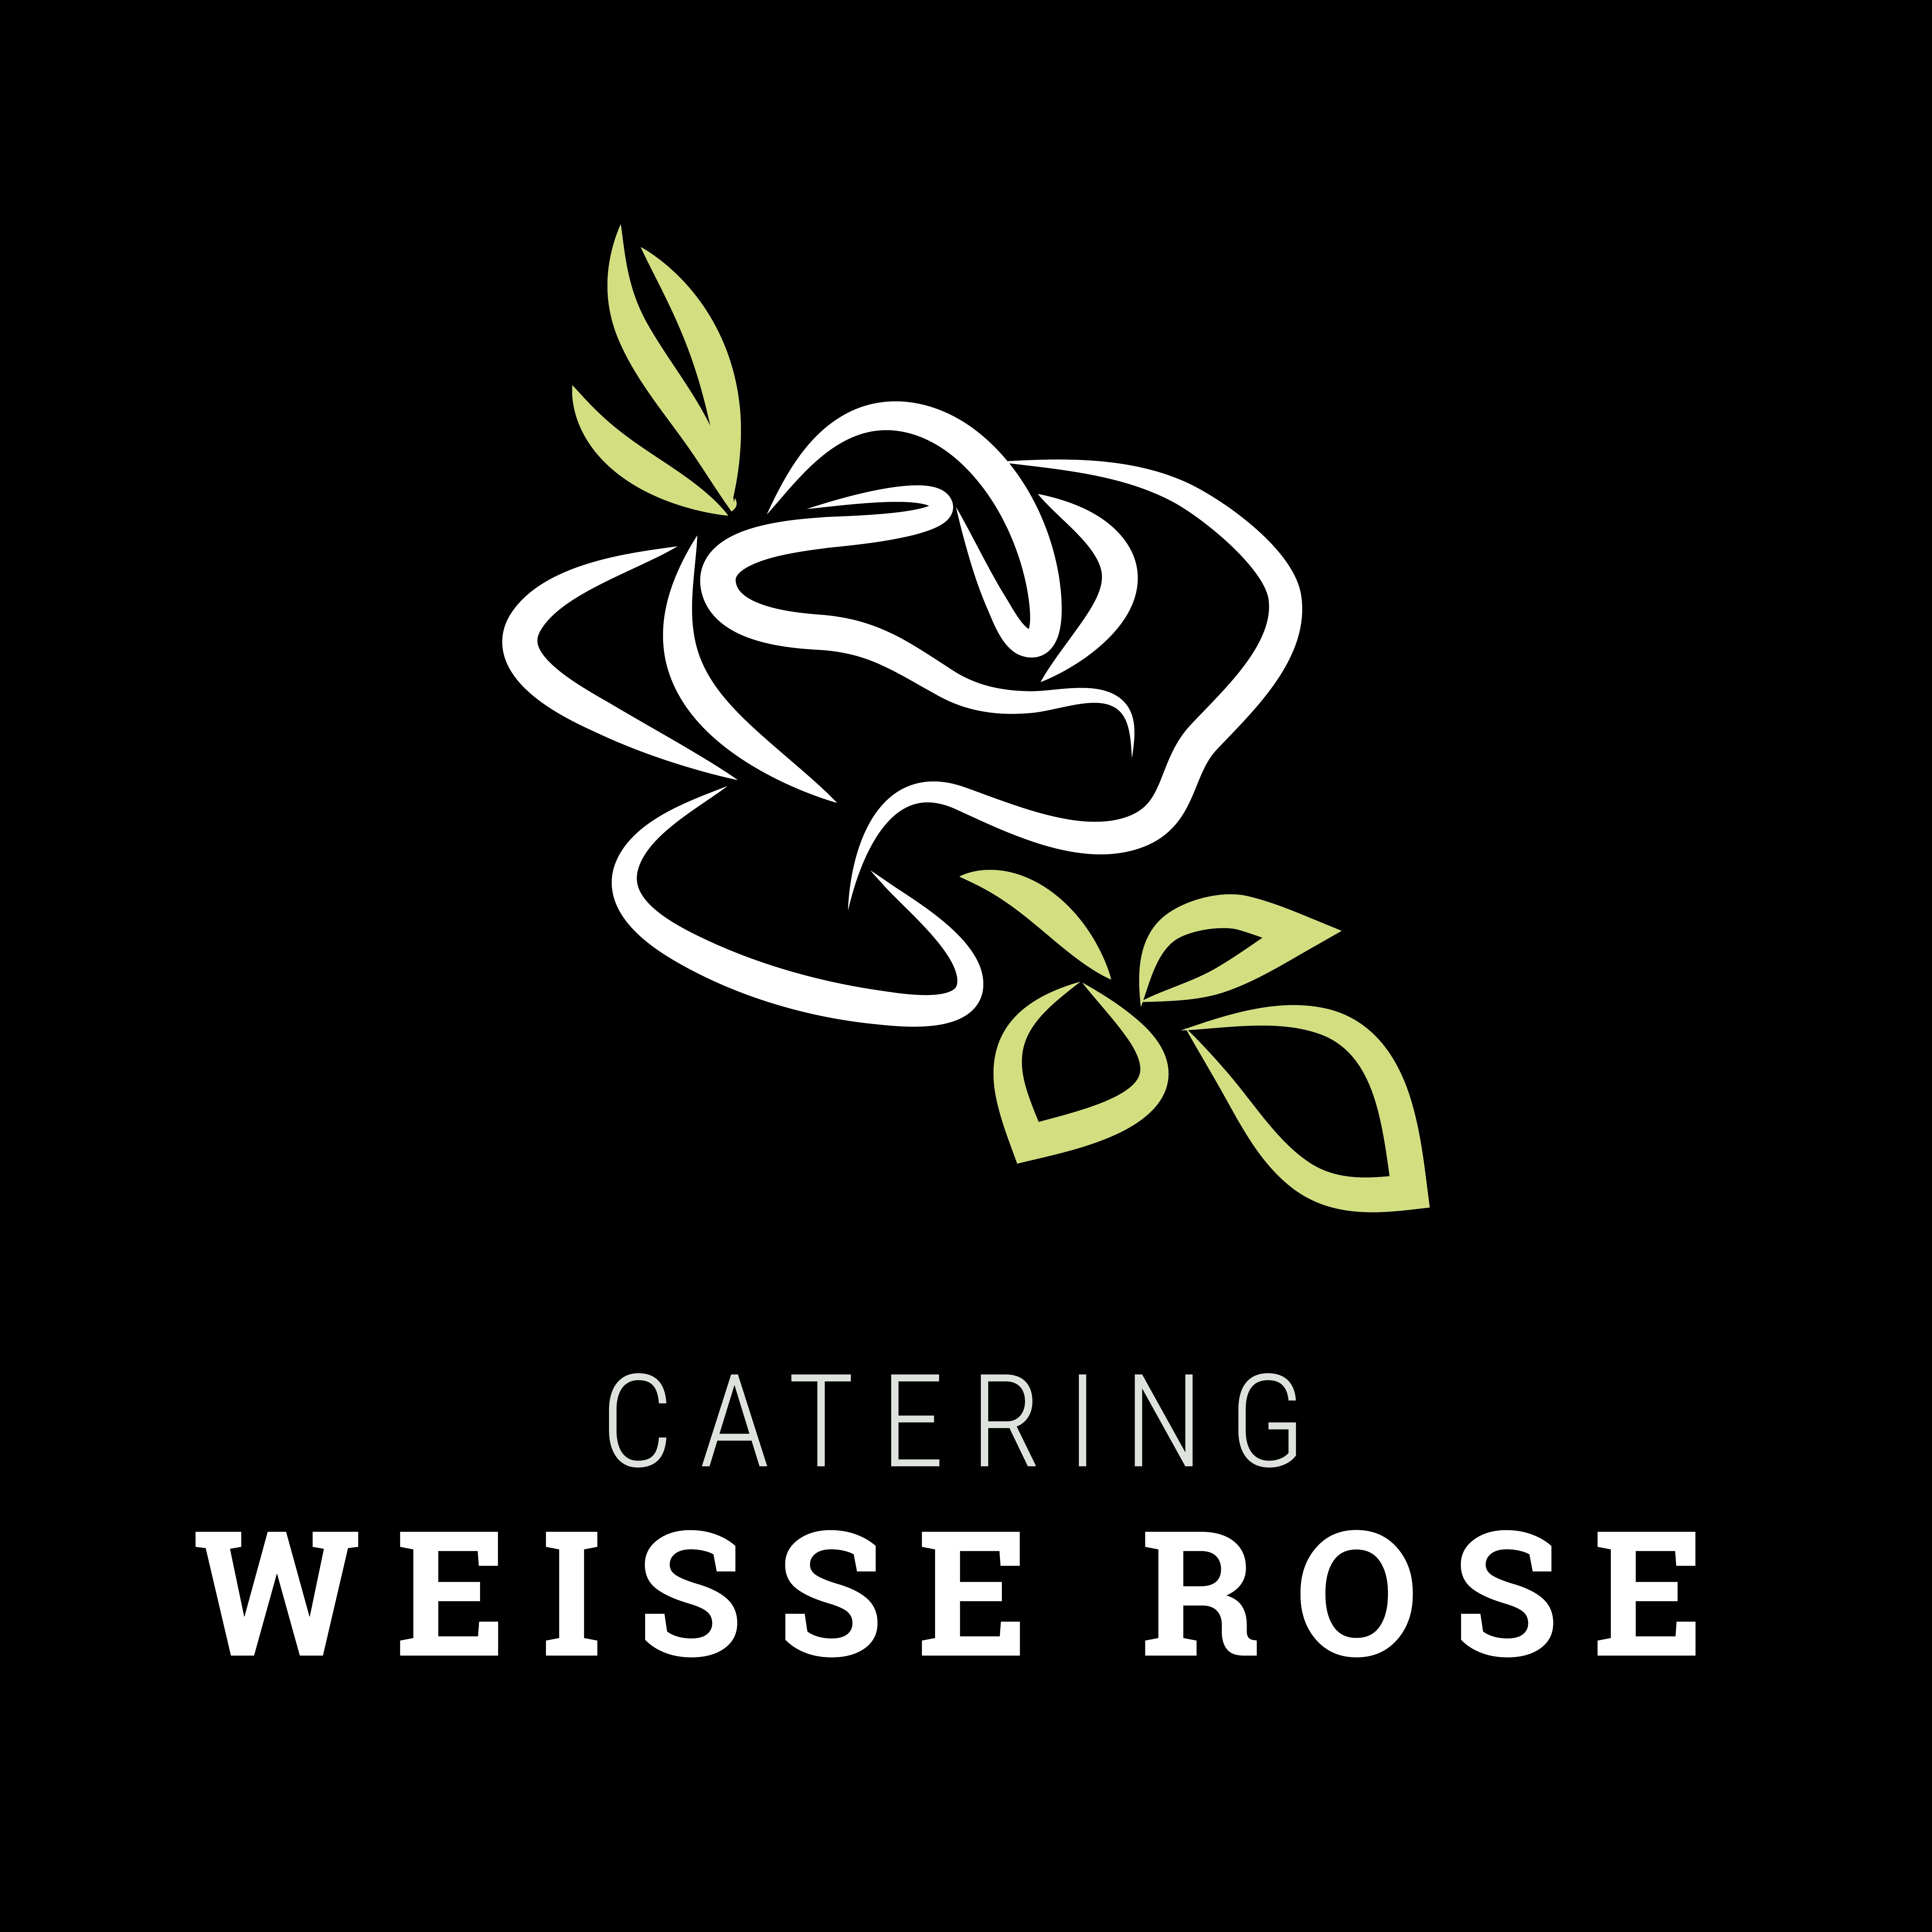 Logo Catering Weisse Rose black bg